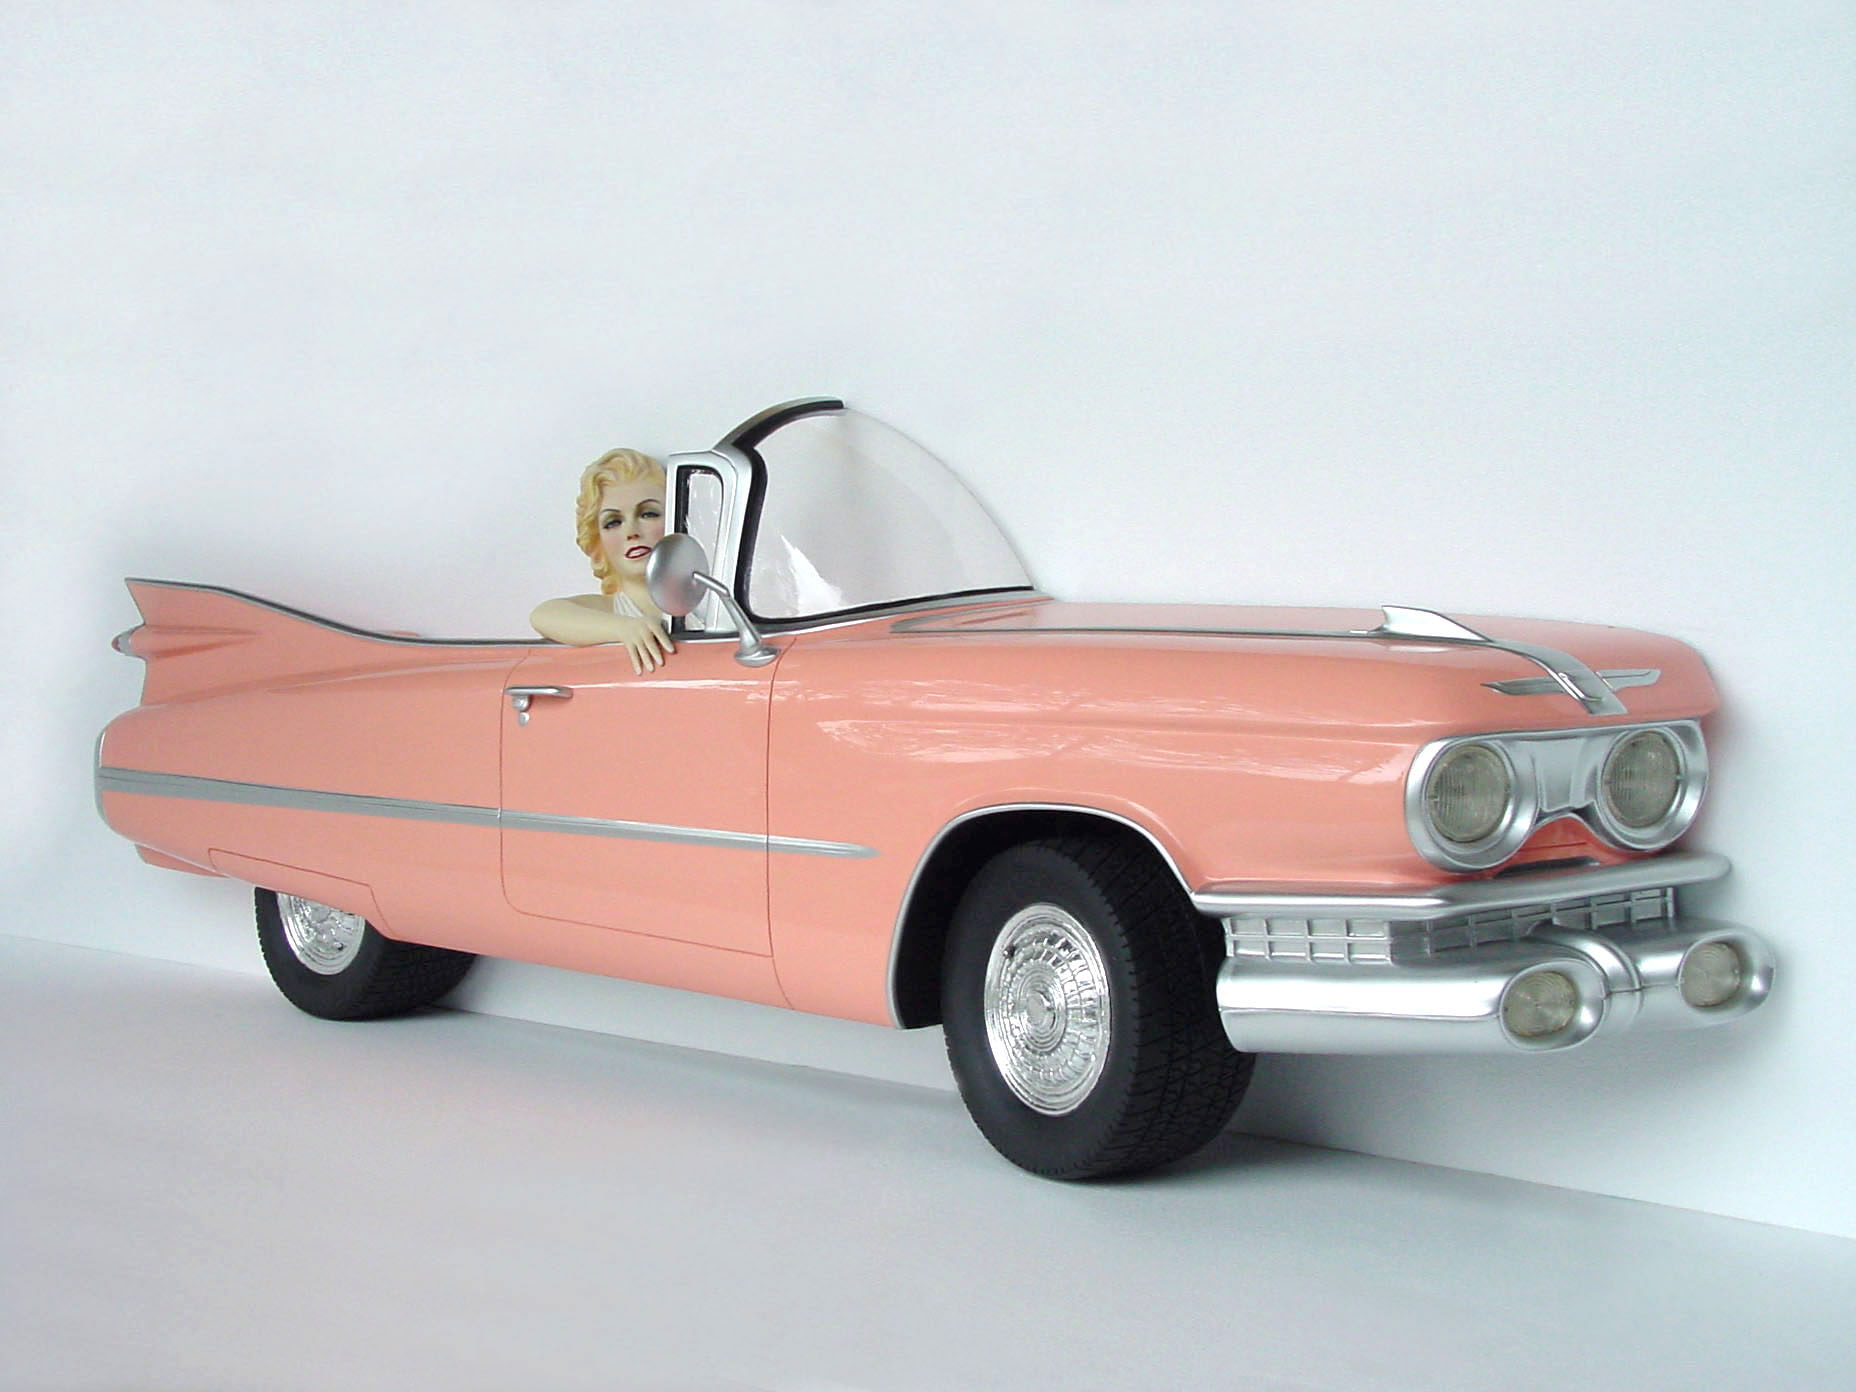 Pink Cadillac Car Wall Decor with Actress